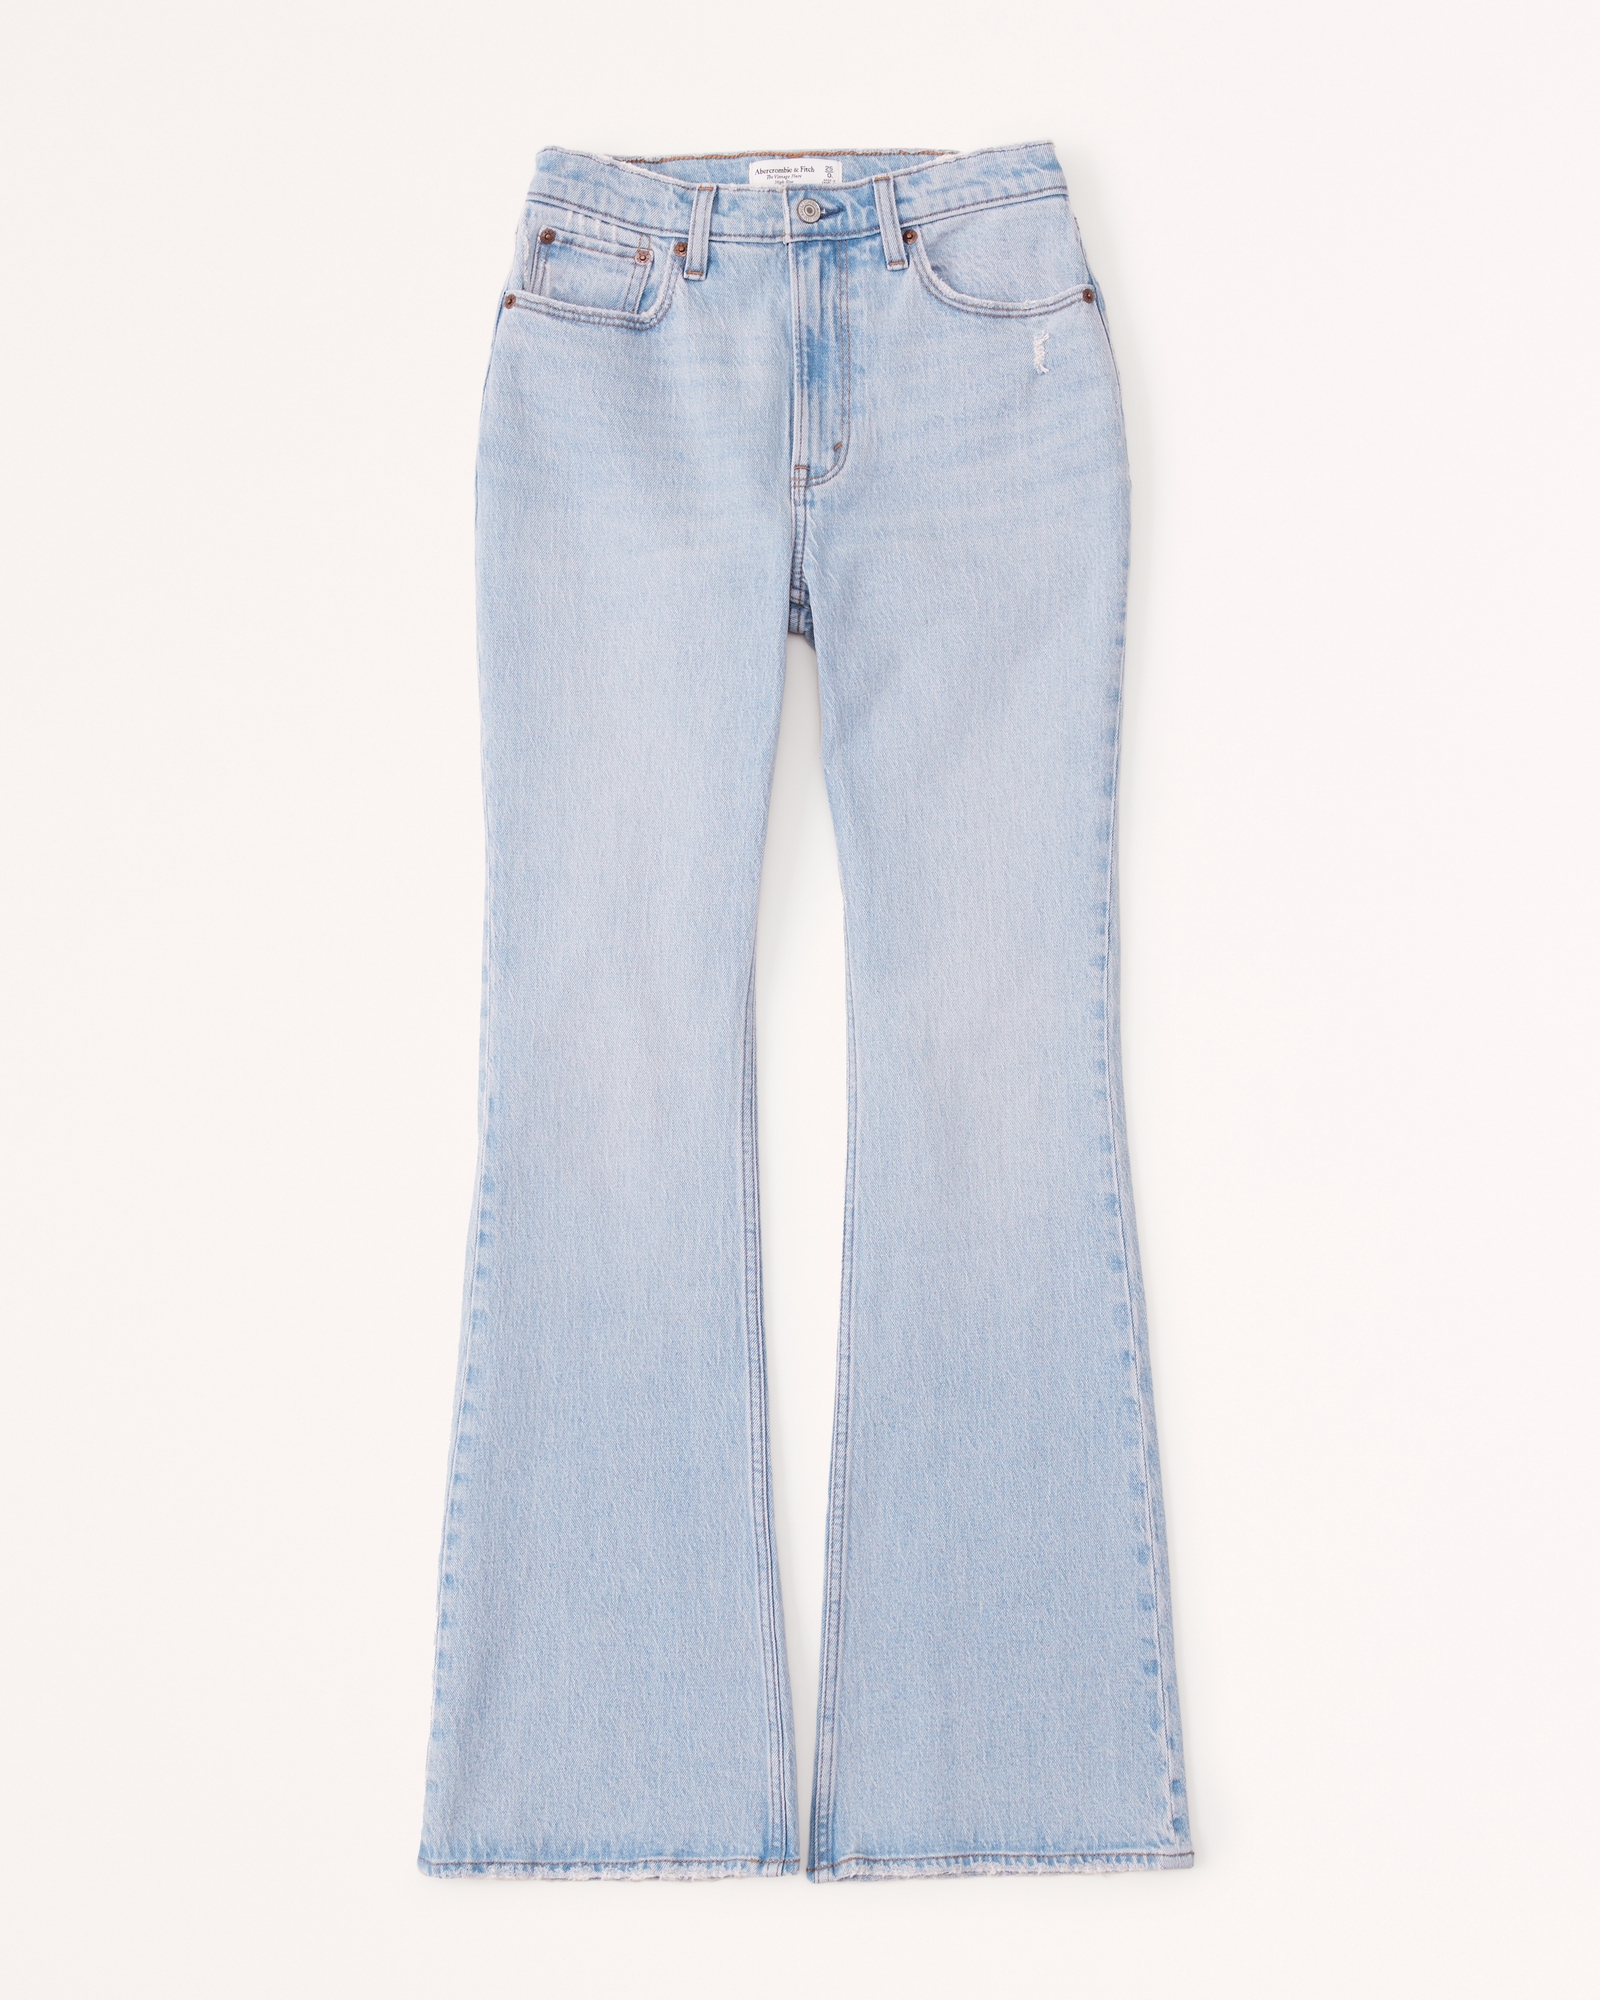 Women's Low-Rise Light Wash Heart Patch Vintage Flare Jeans